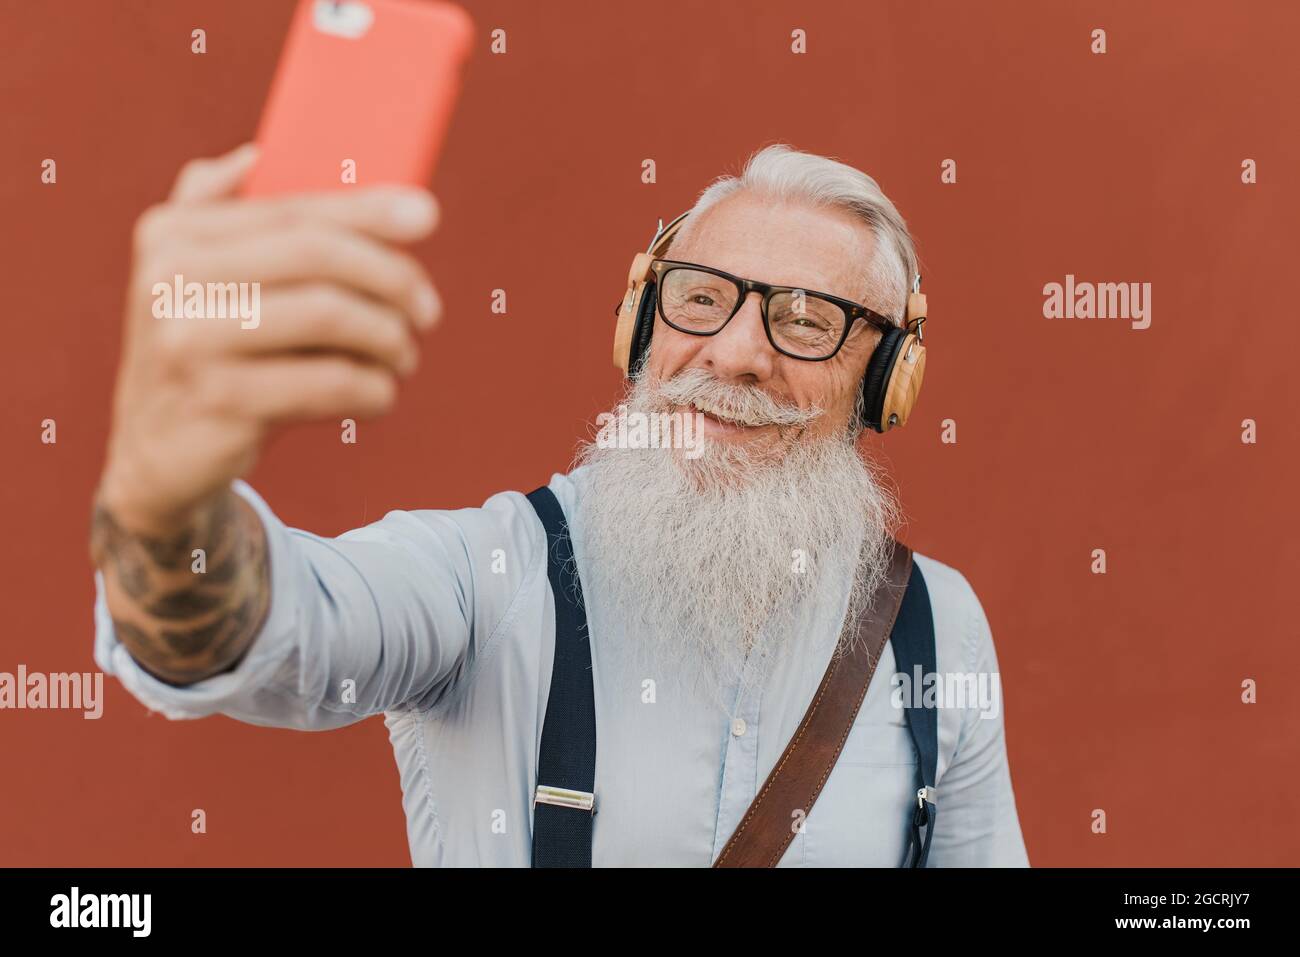 senior man using smartphone for fun Stock Photo